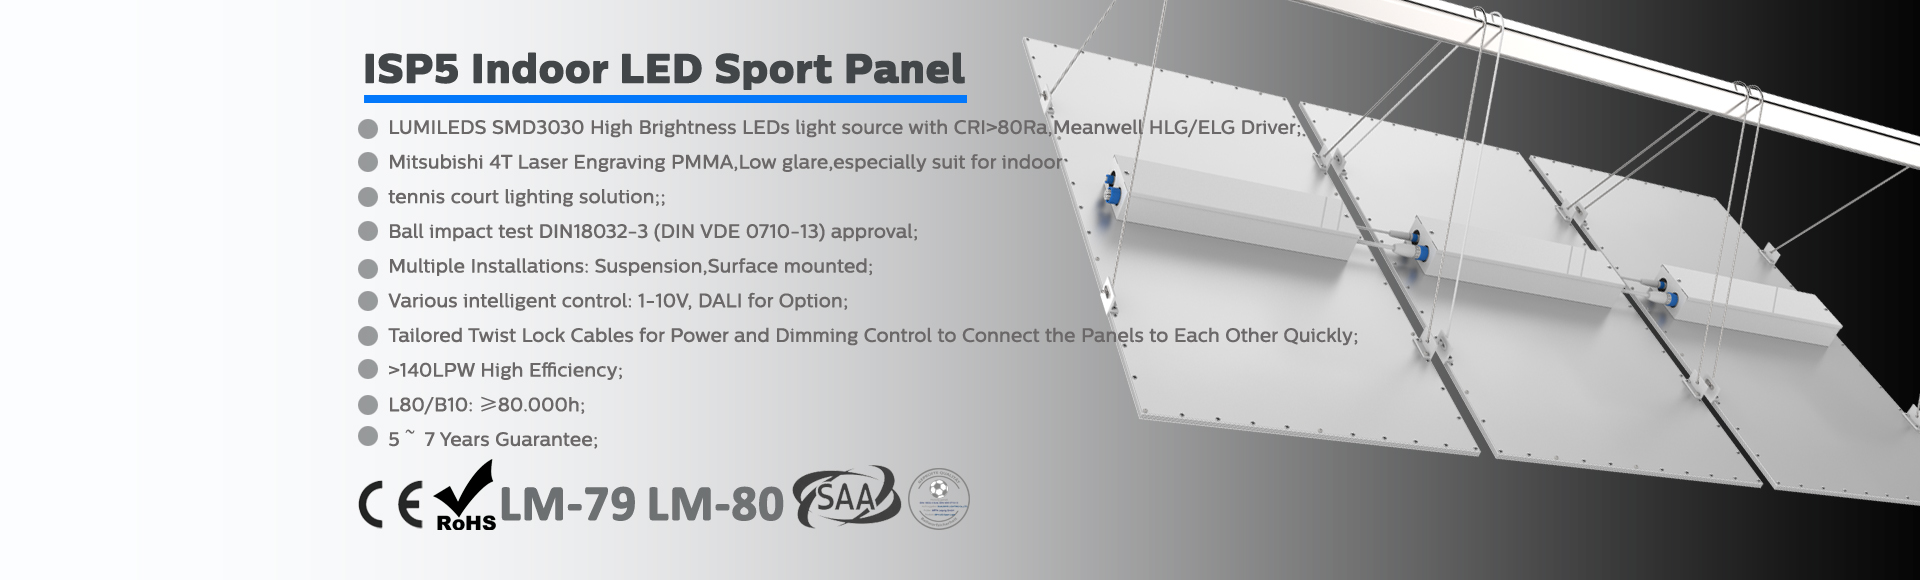 ISP5 Indoor LED Sport Panel